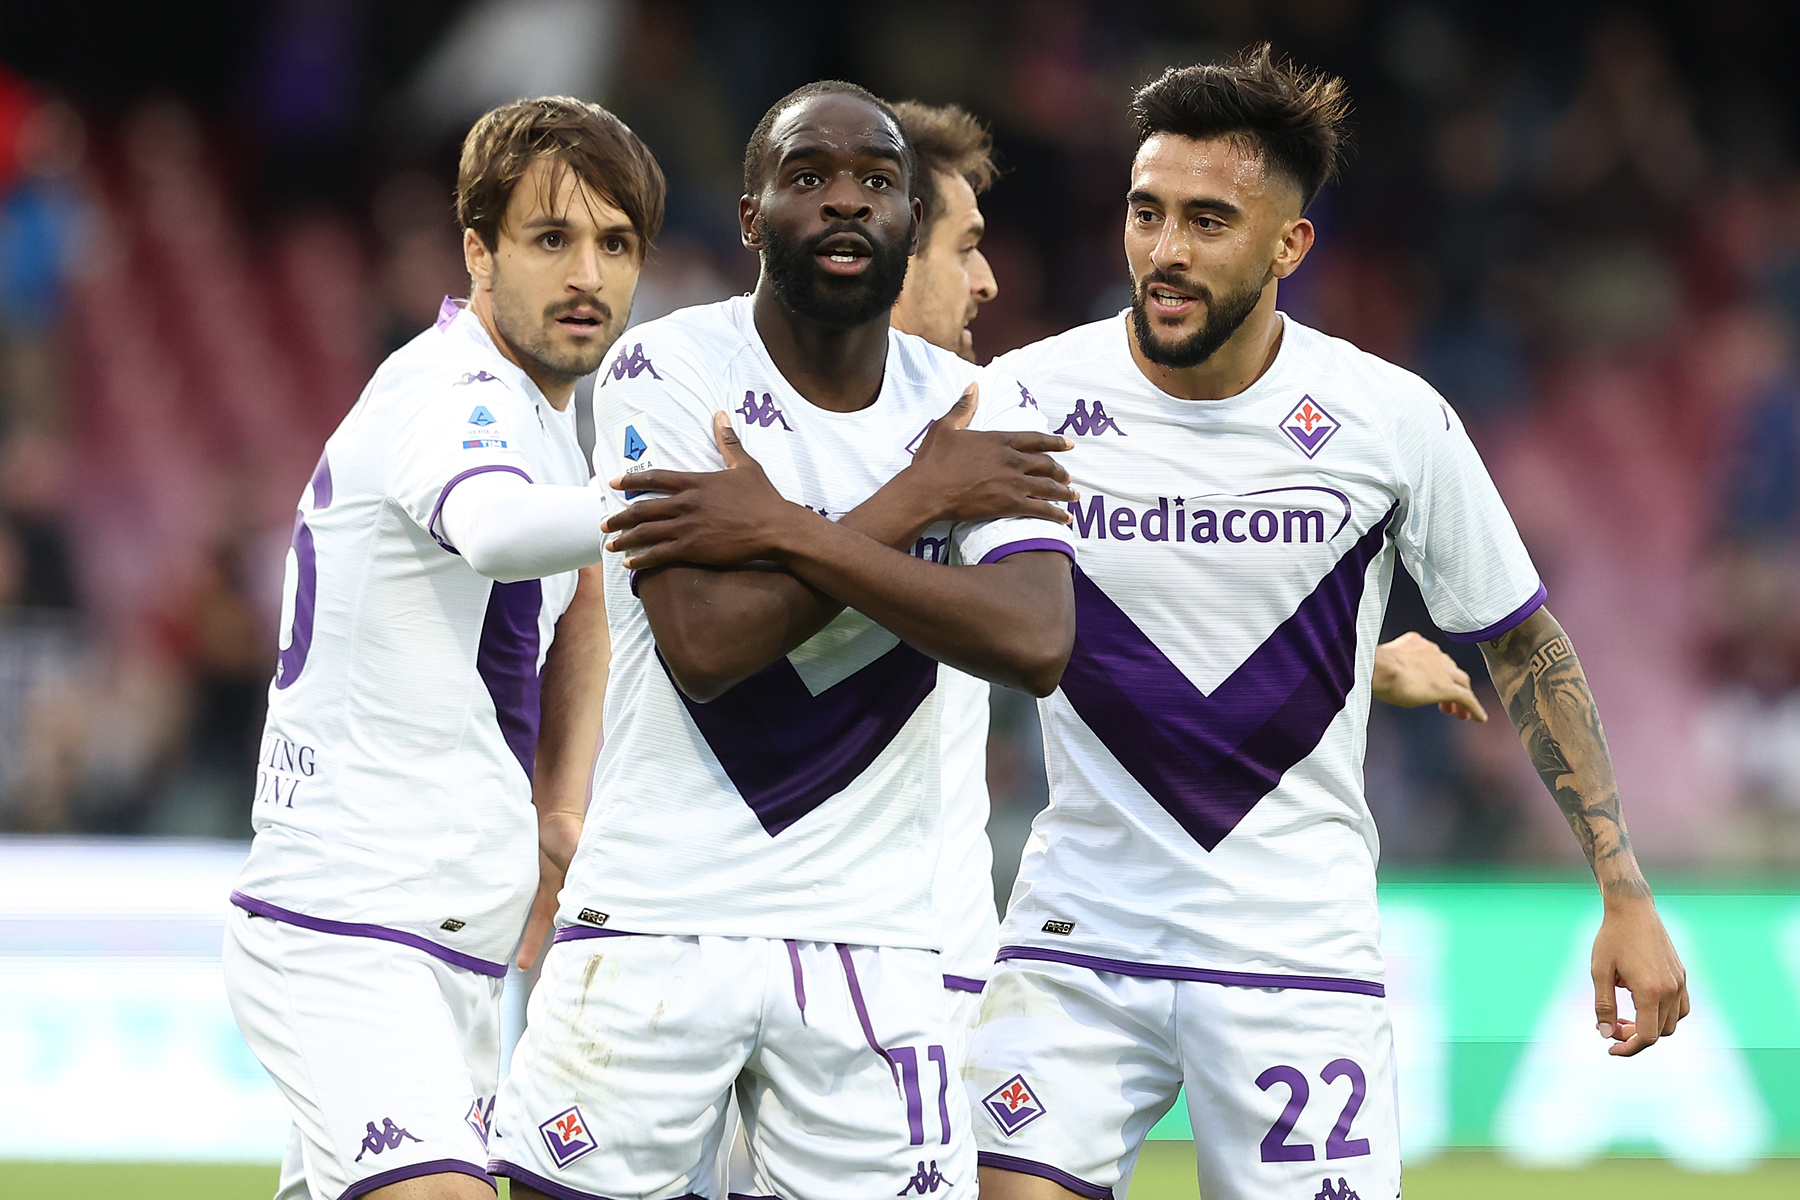 Fiorentina – FC Basel typy i kursy bukmacherskie